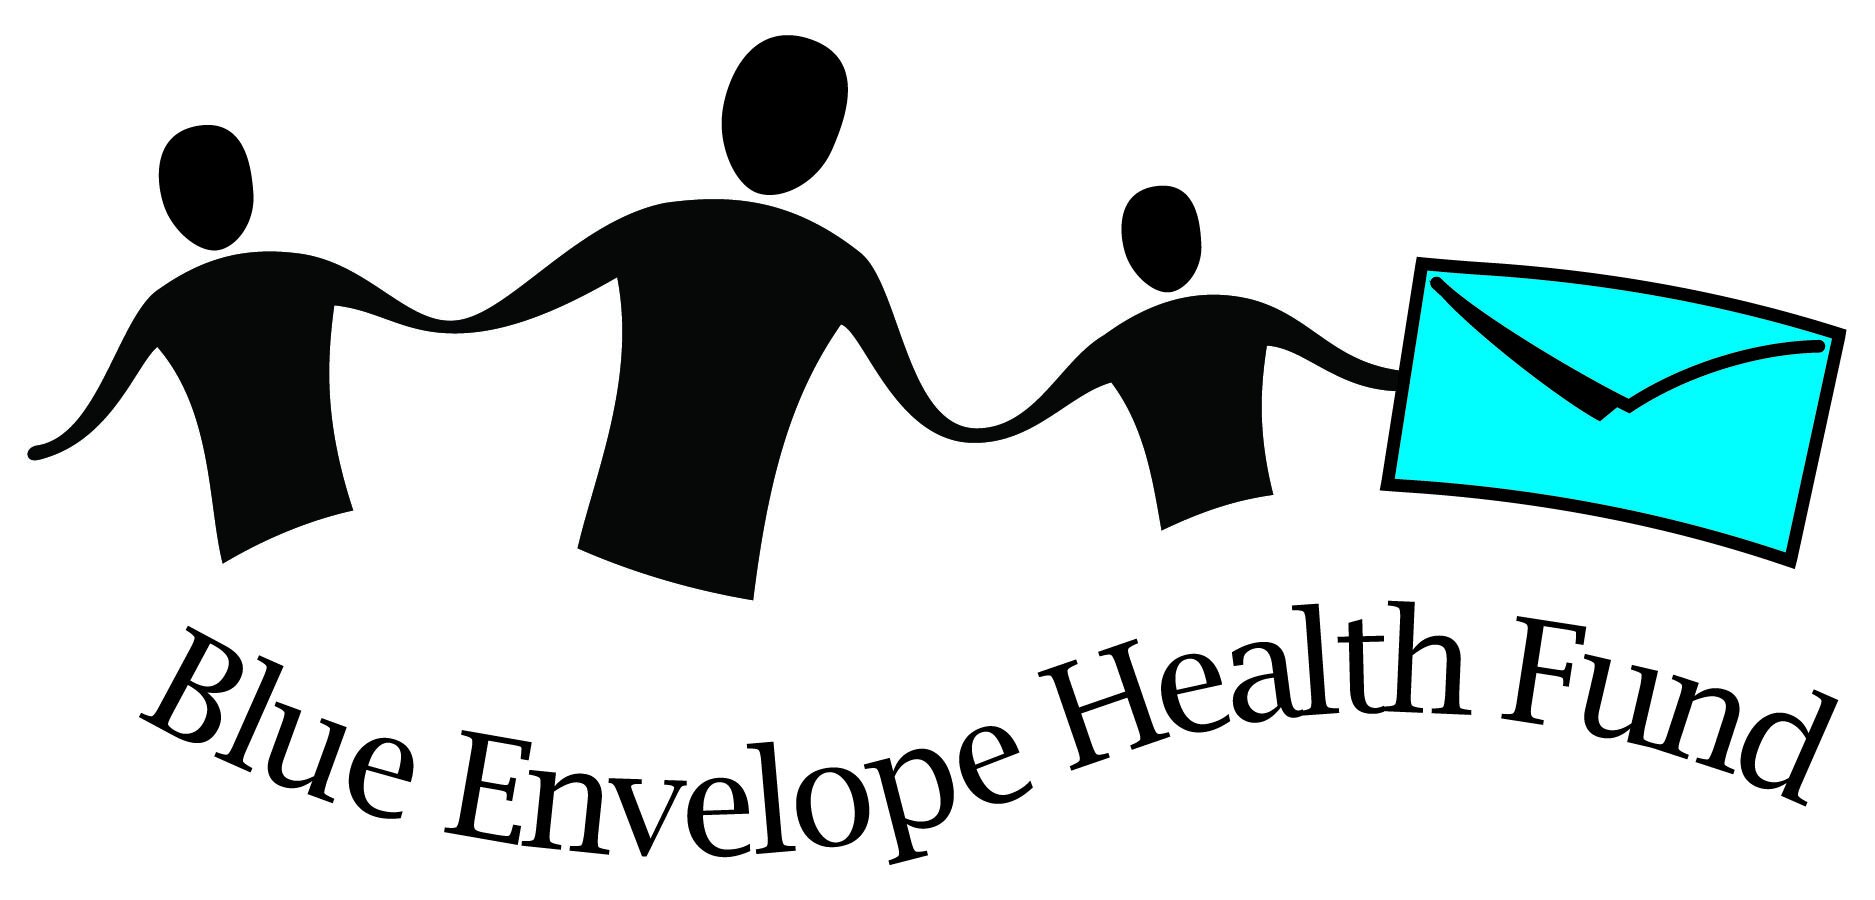 Blue Envelope Health Fund.jpg